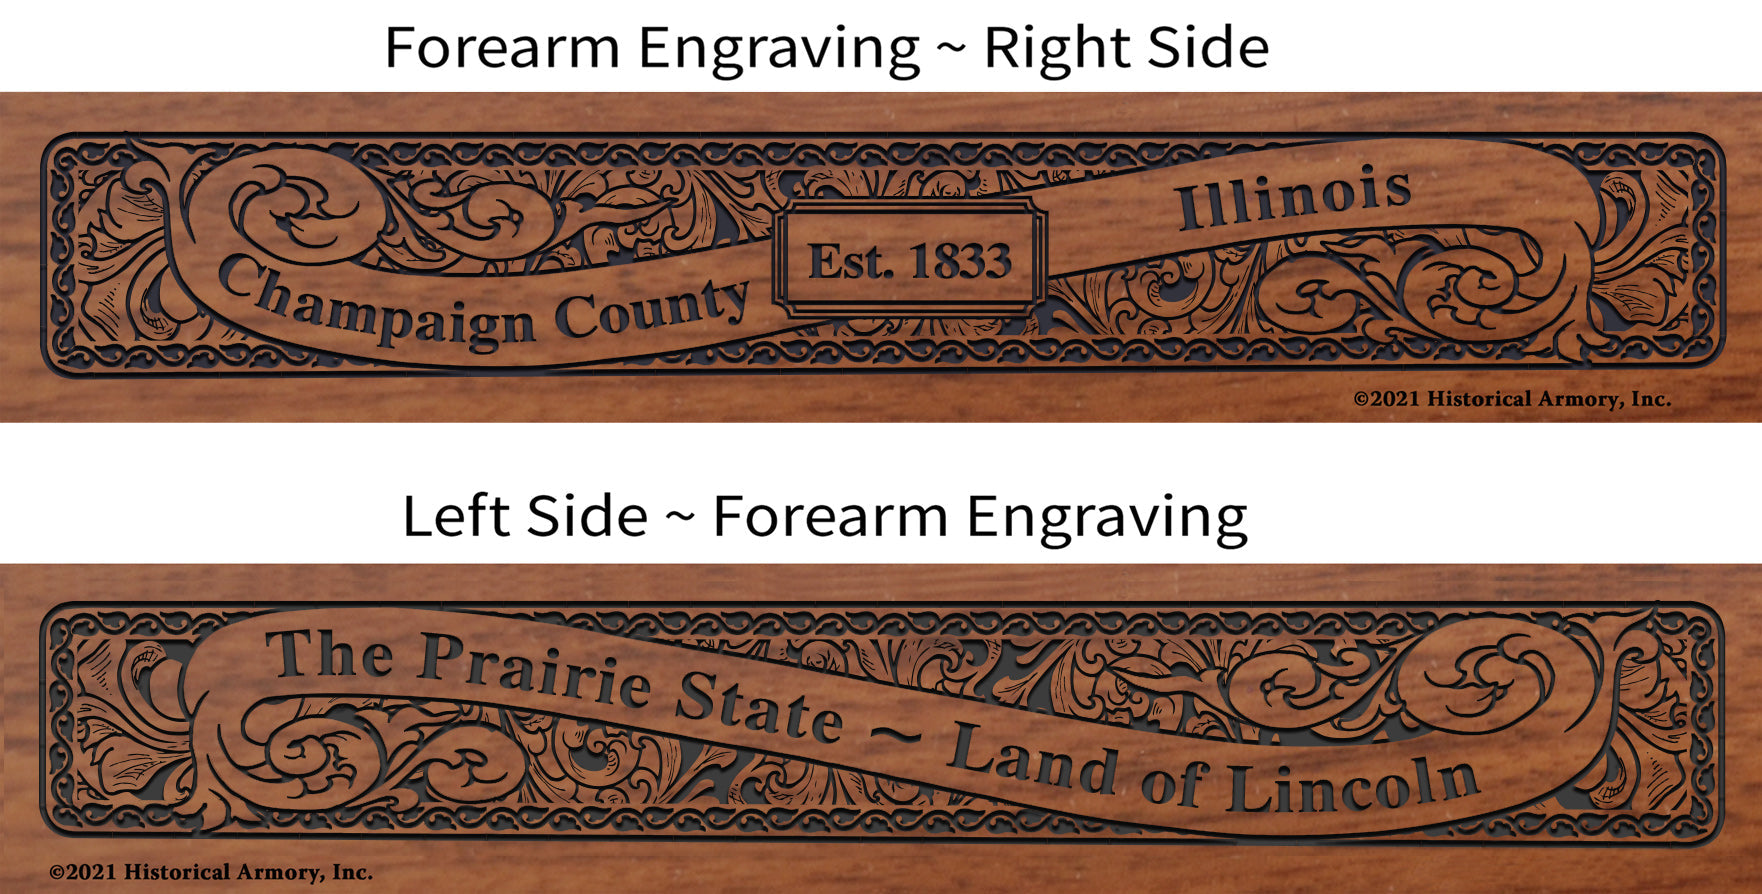 Champaign County Illinois Establishment and Motto History Engraved Rifle Forearm